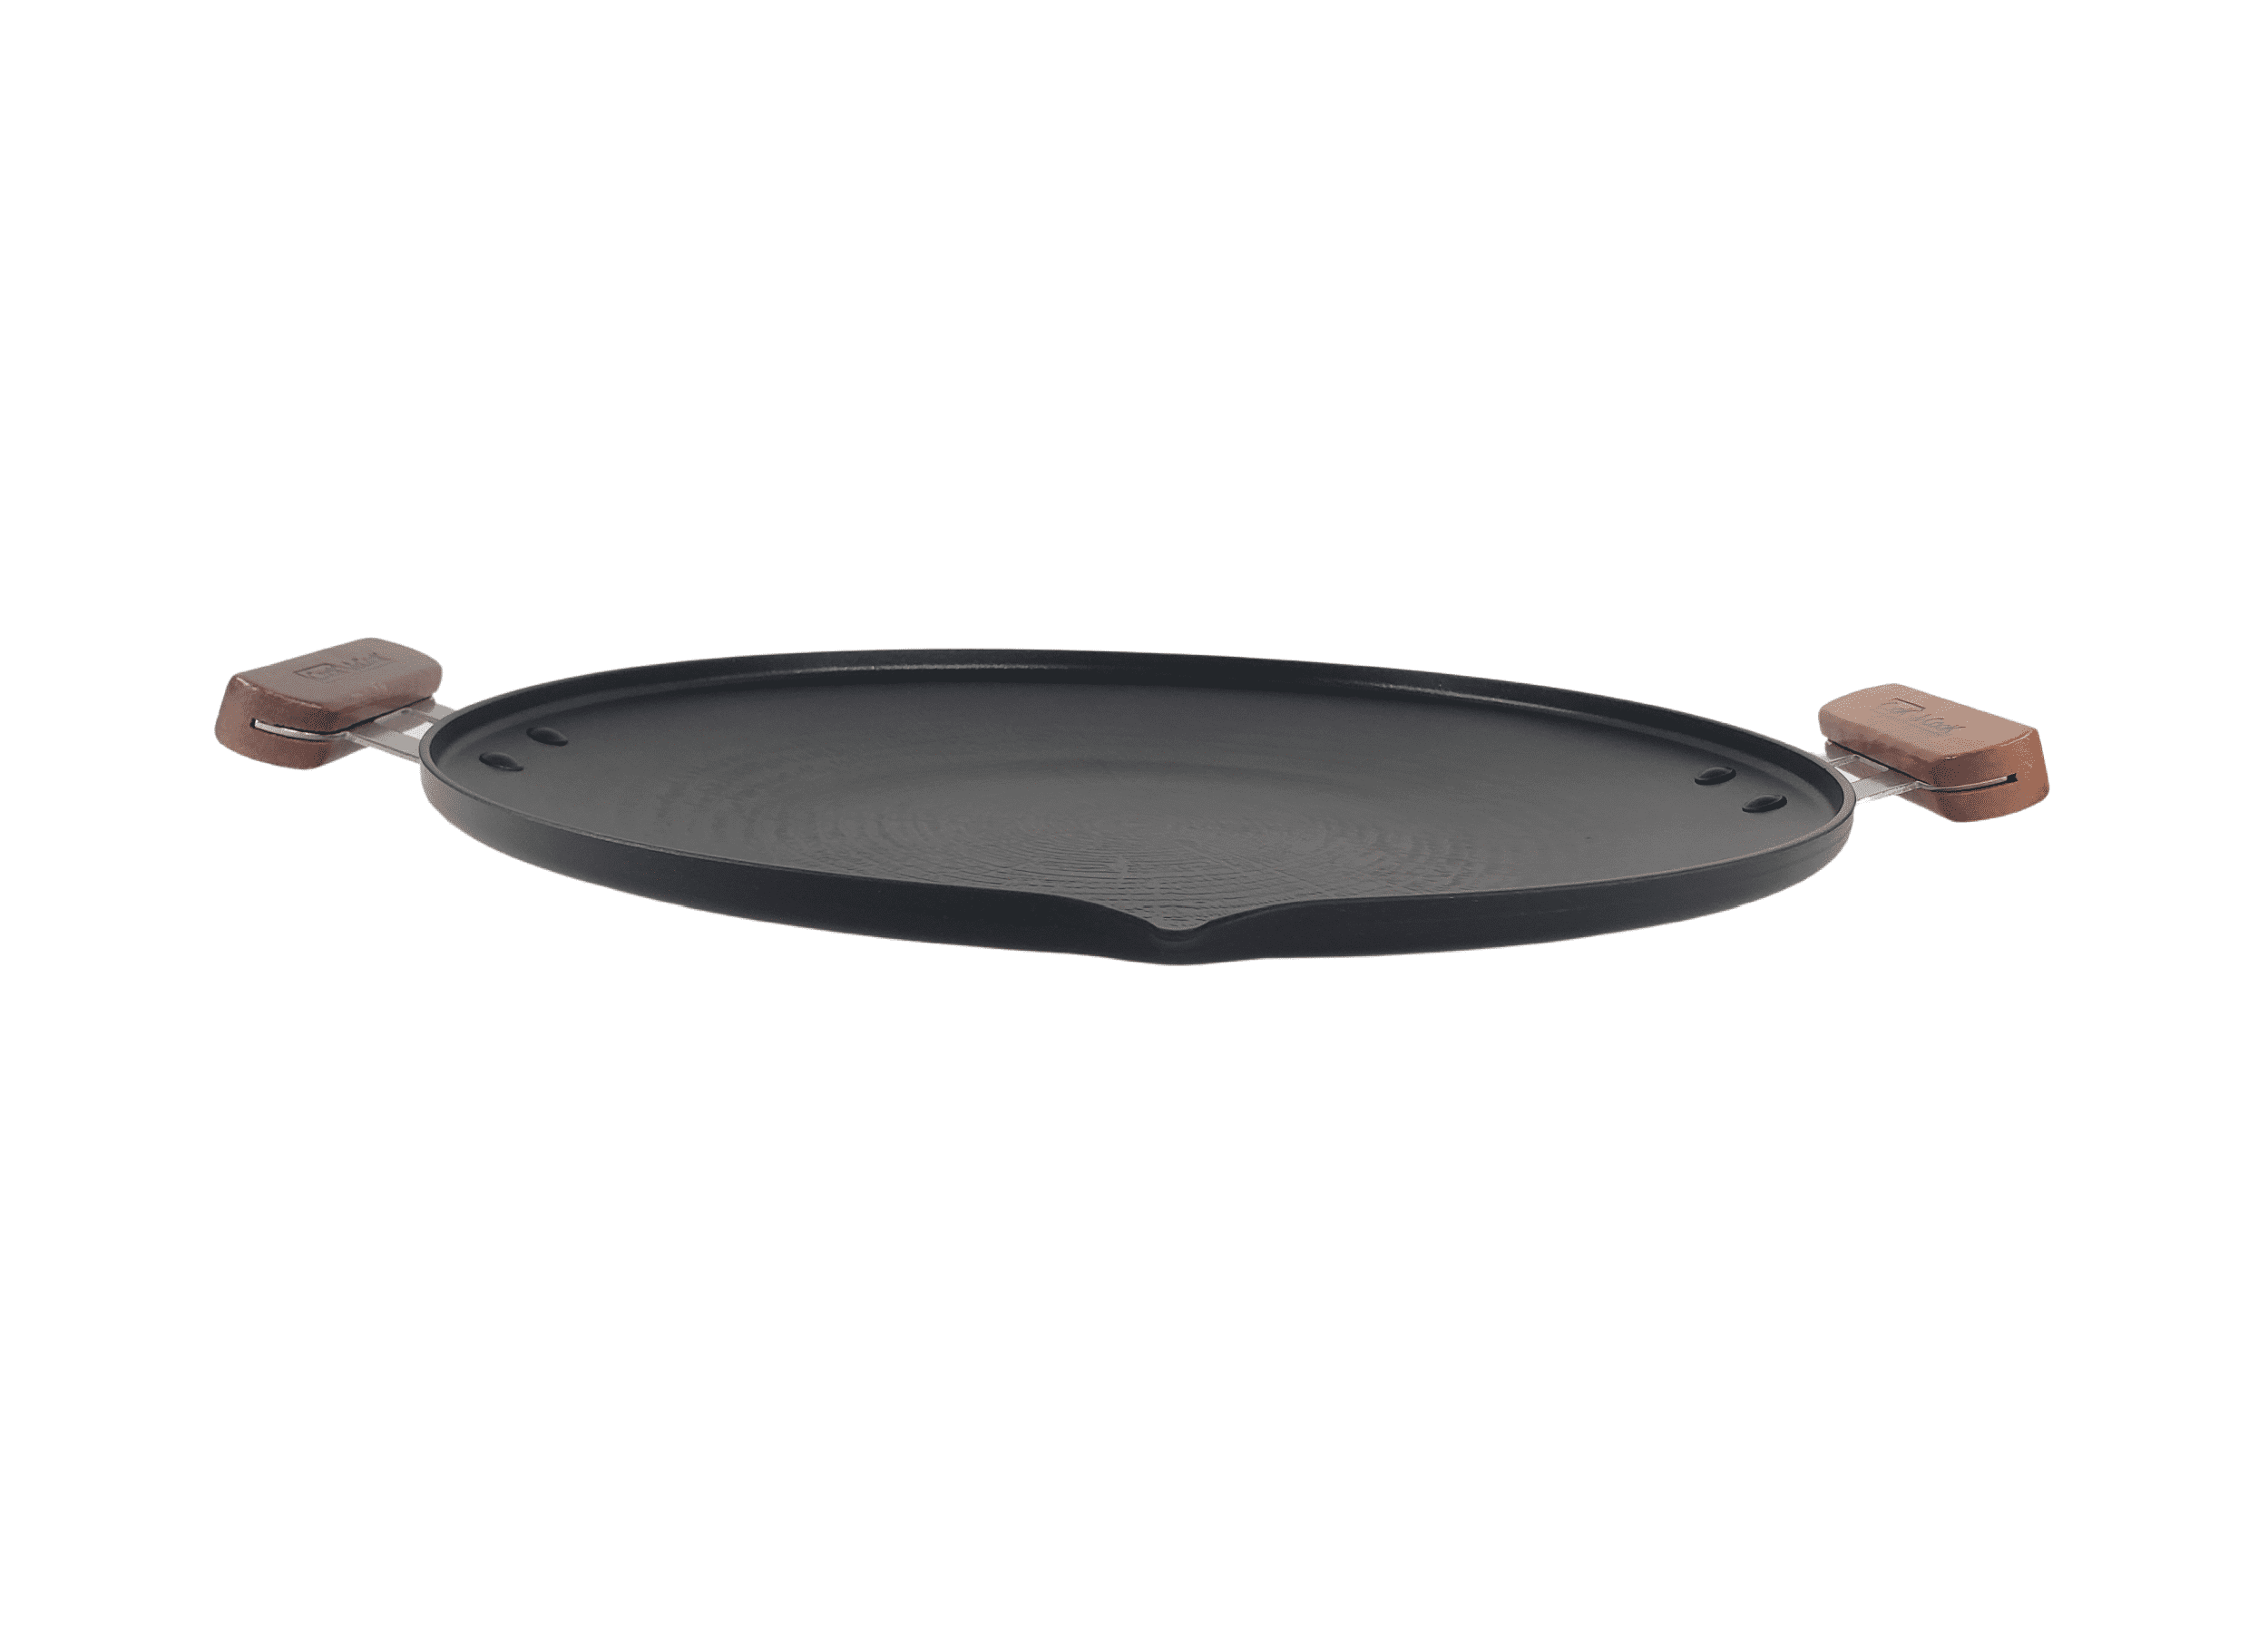 Korean Stone Grill Pan with Handles, Dolpan 돌판 – eKitchenary